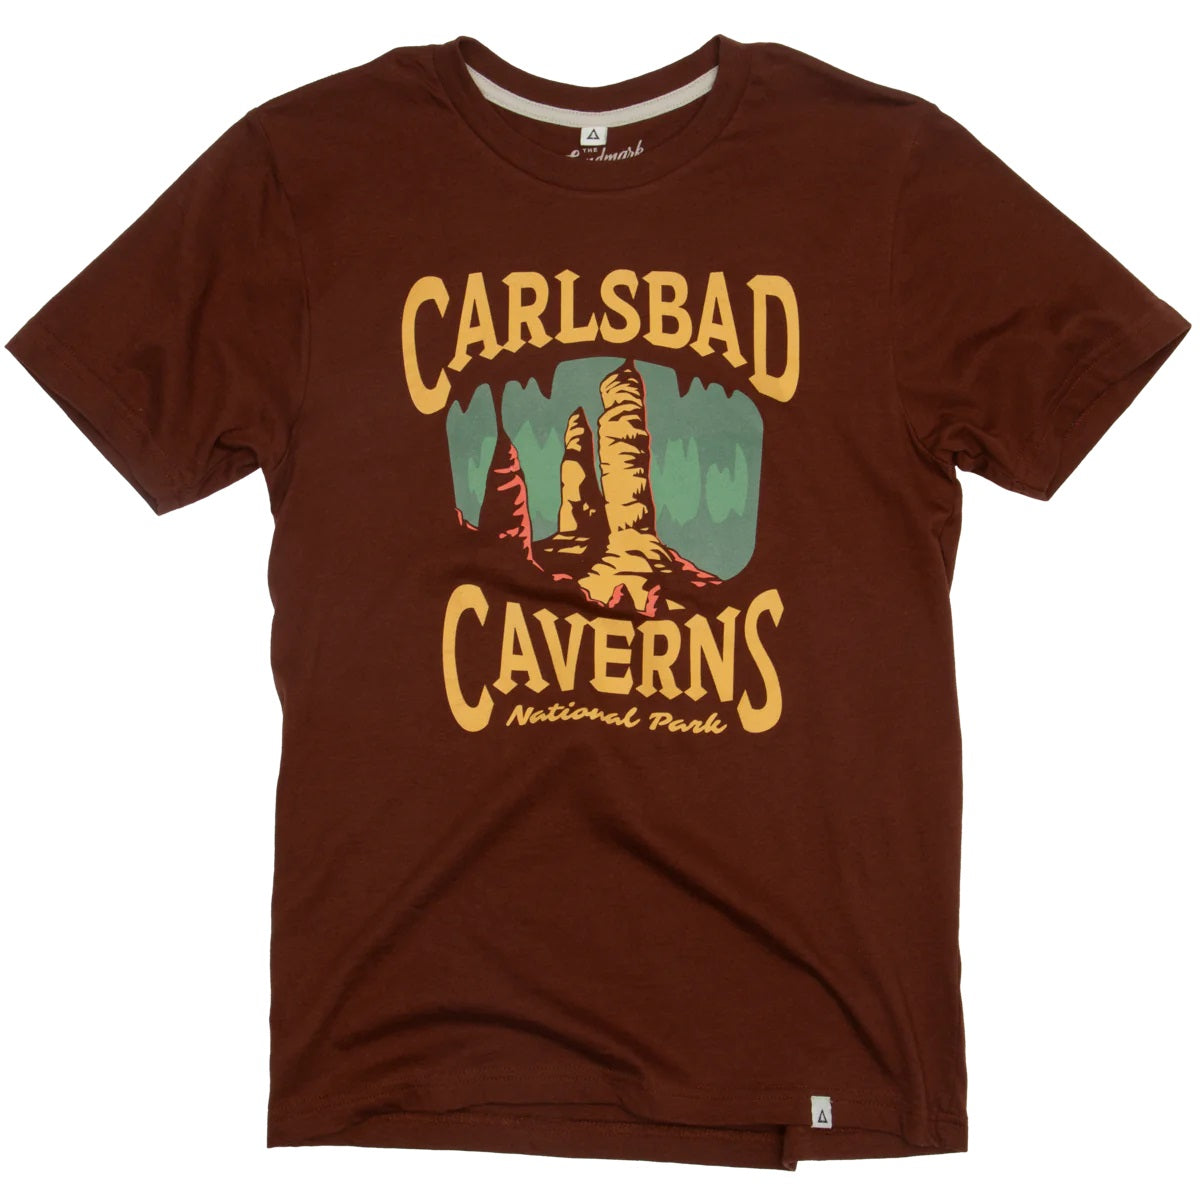 Carlsbad Caverns National Park Short Sleeve Tee